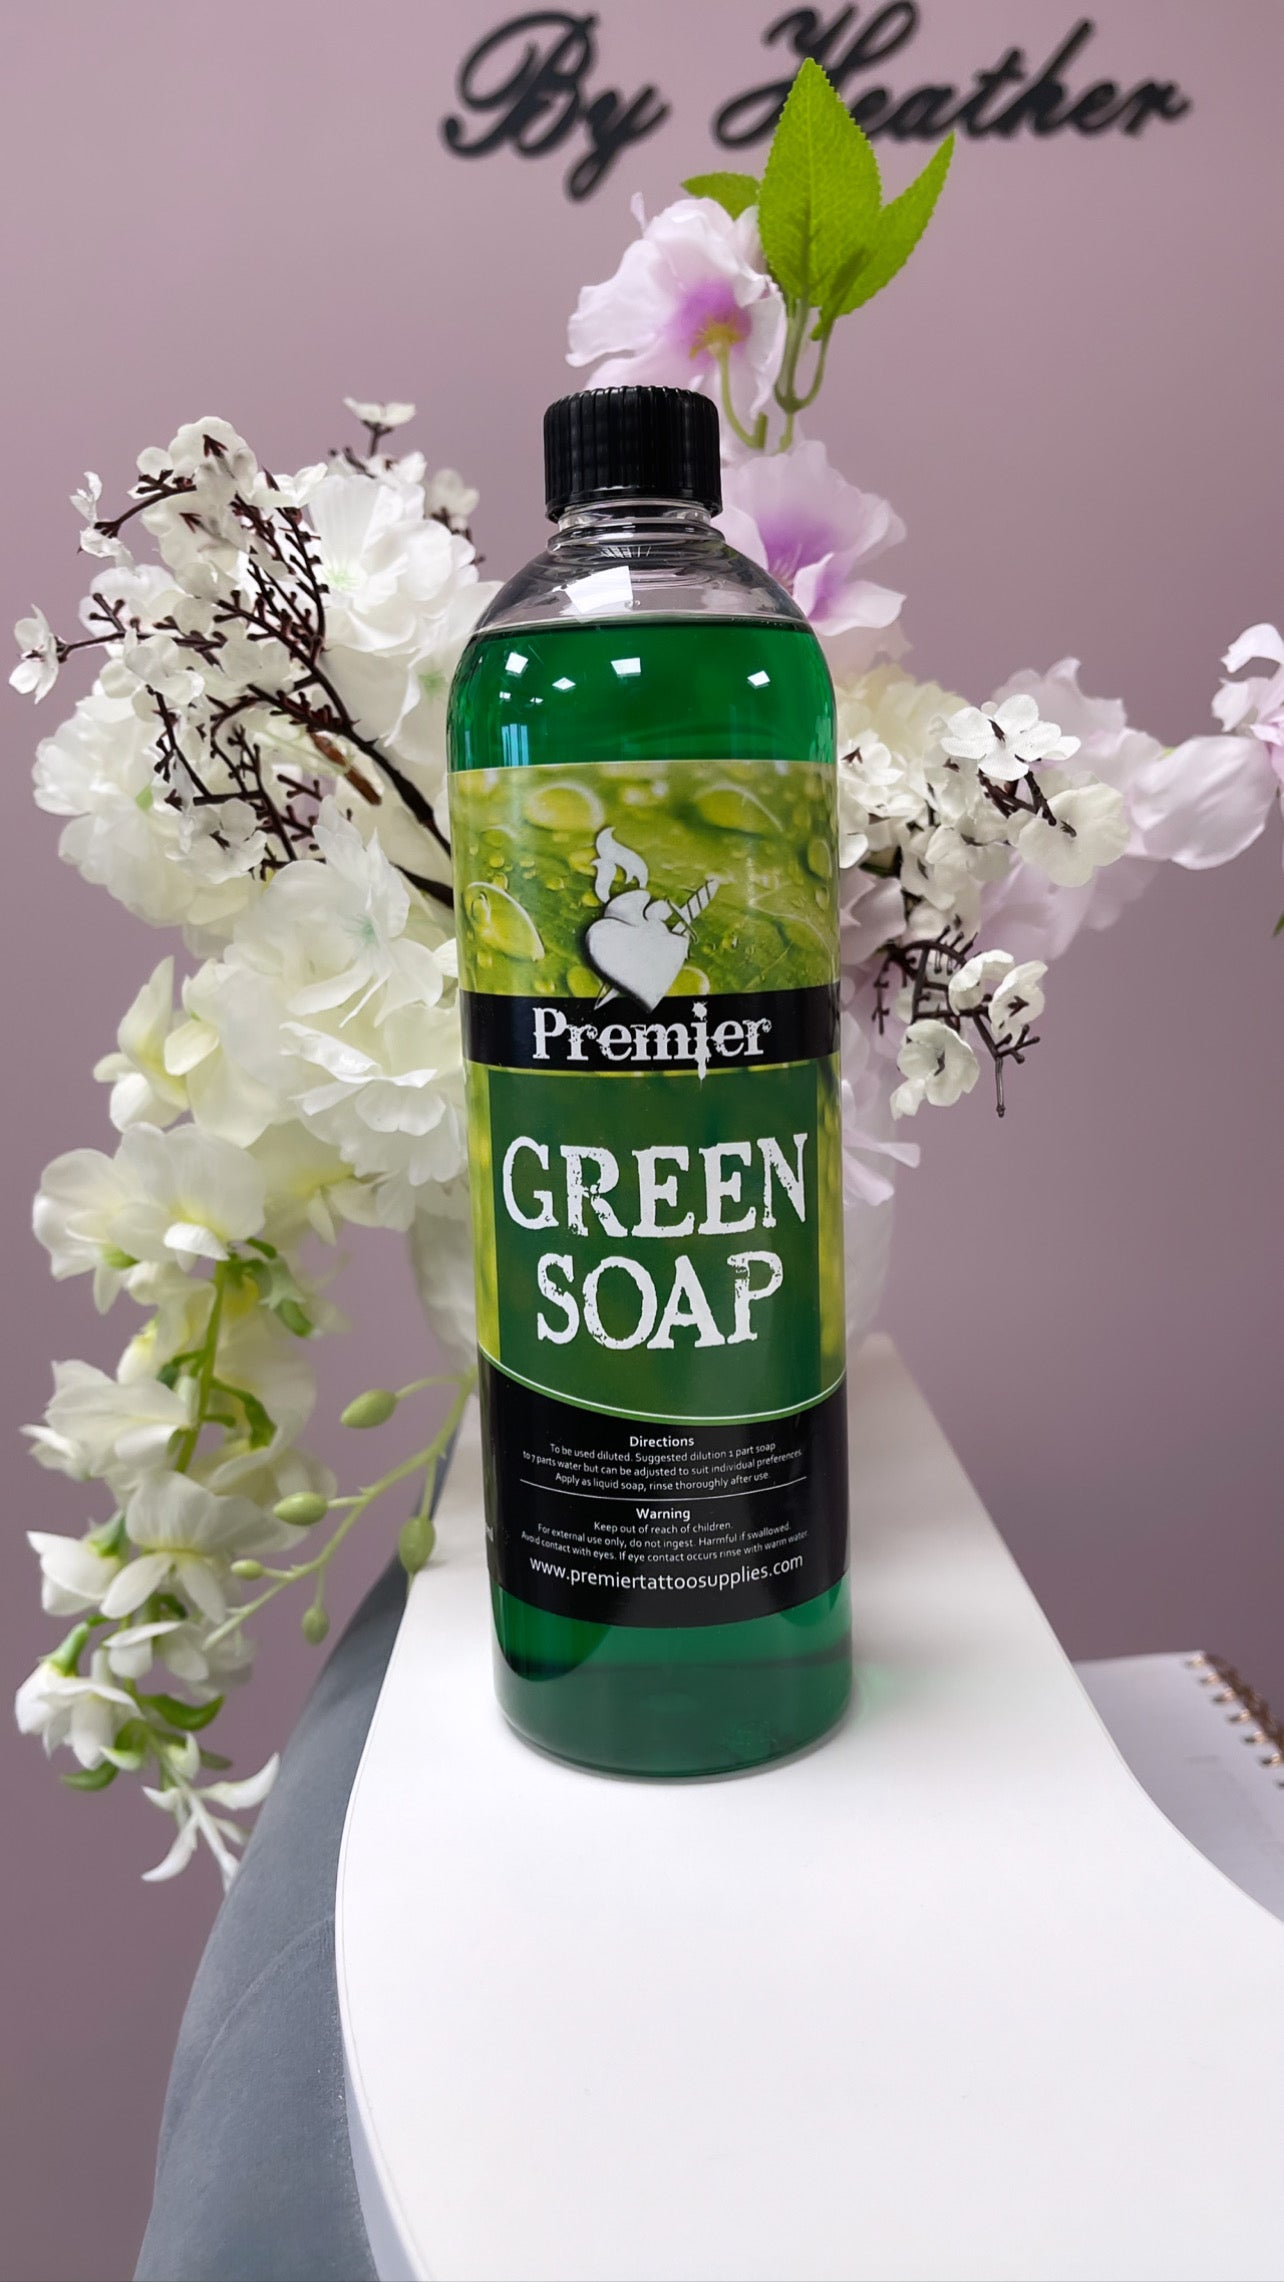 Green soap